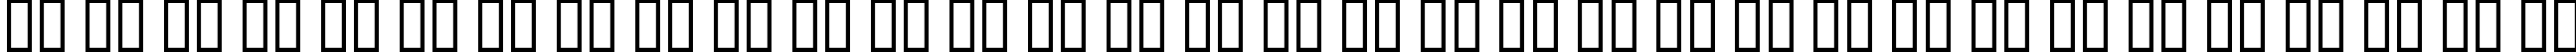 Пример написания русского алфавита шрифтом Poseidon AOE